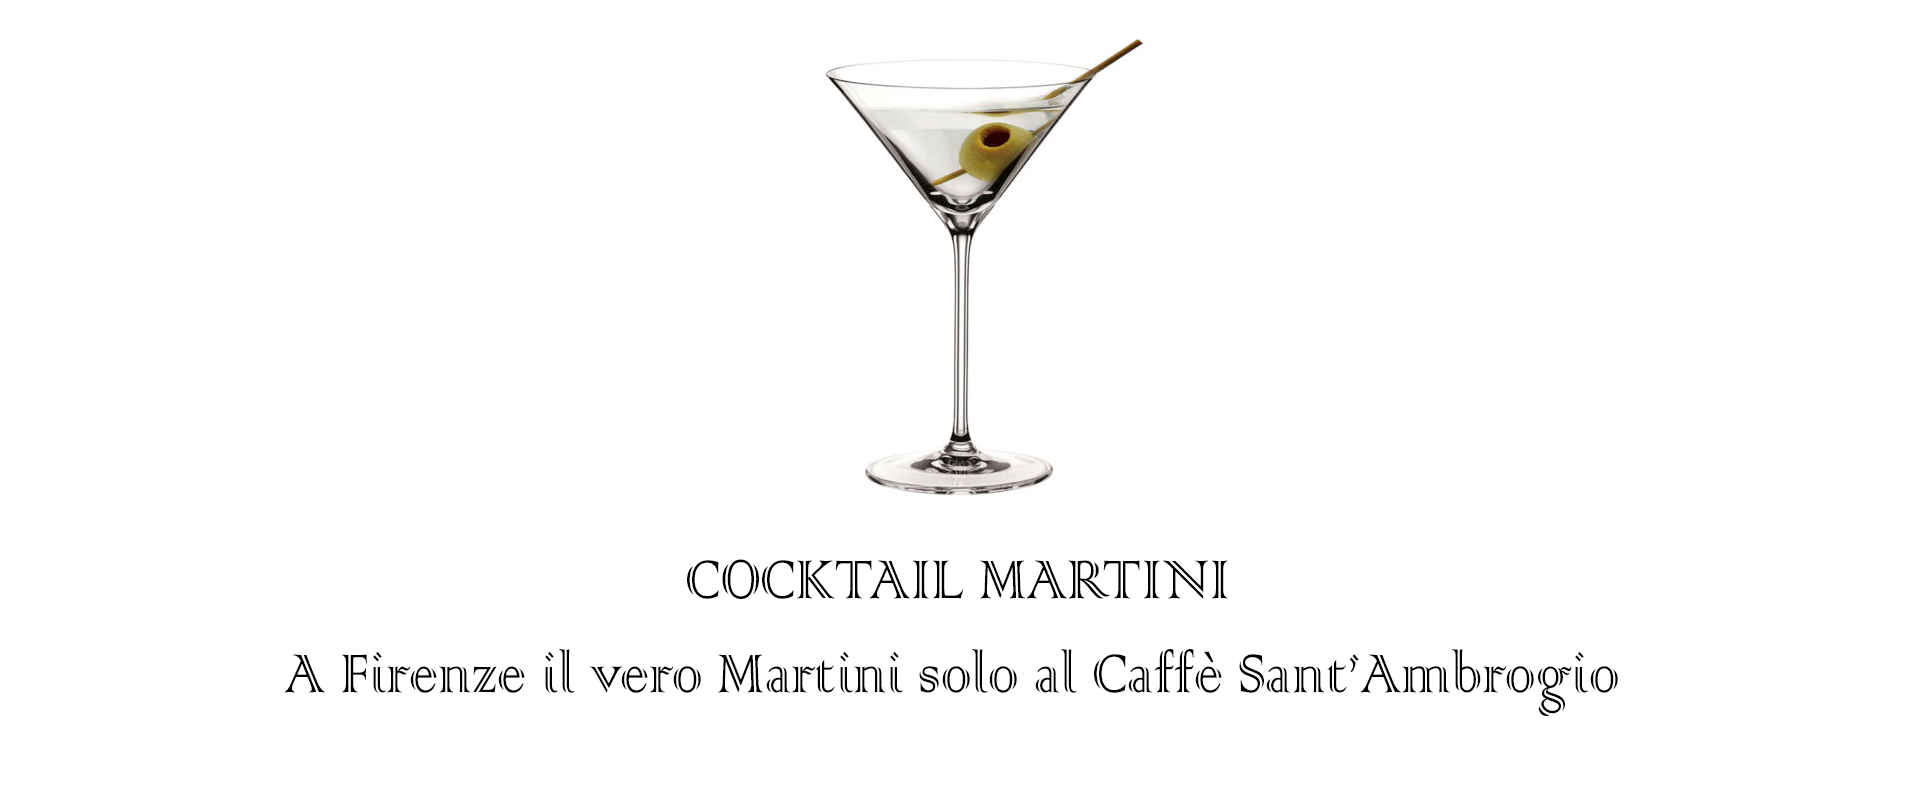 martini - horizontal - aperitivi firenze